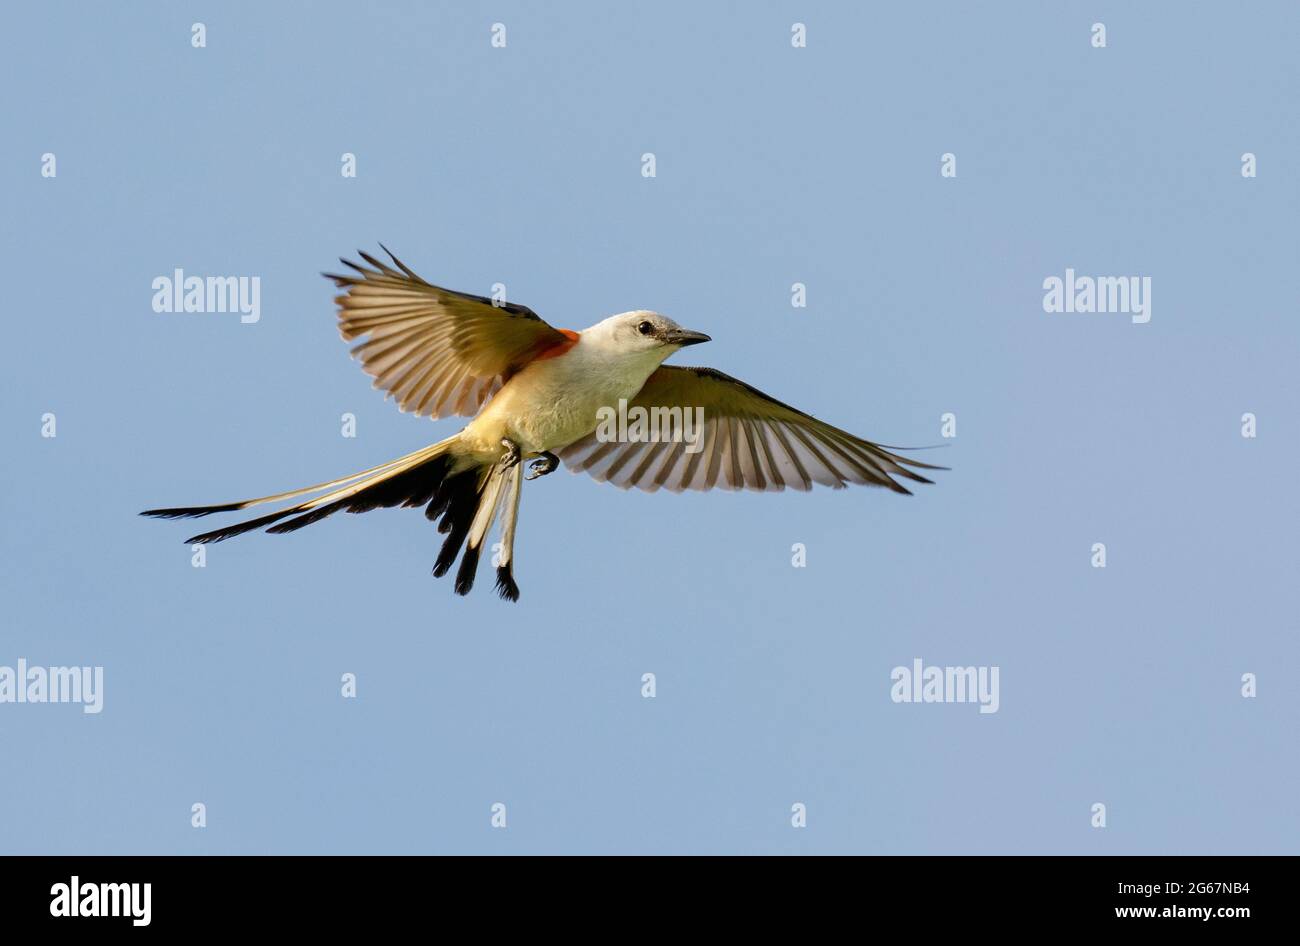 Scissor-tailed flycatcher (Tyrannus forficatus) flying in blue sky, Galveston, Texas, USA. Stock Photo